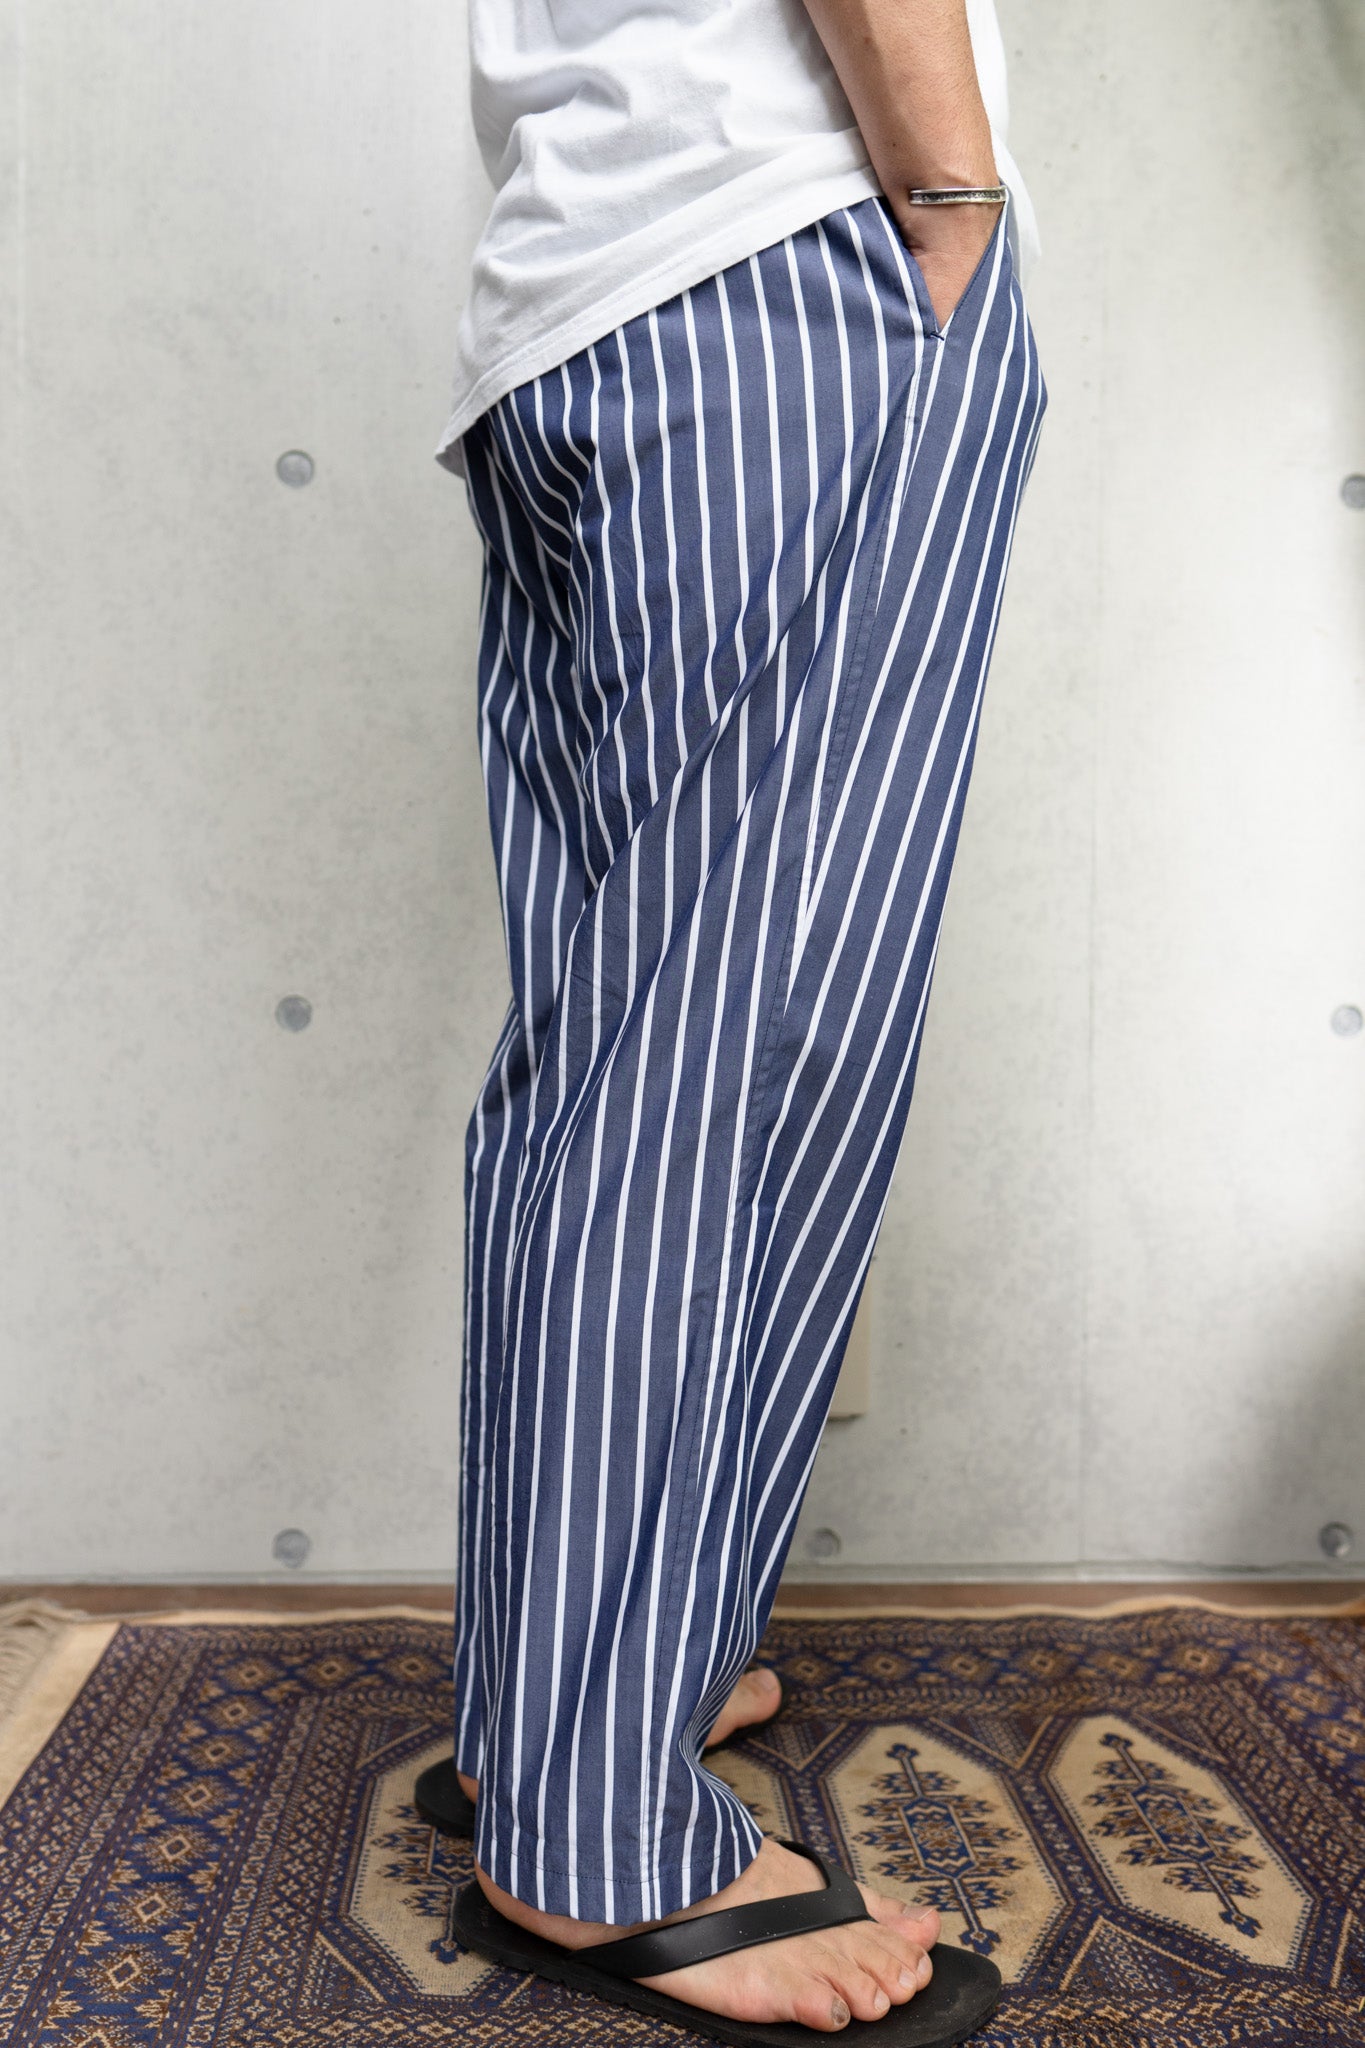 his pants-navy stripe